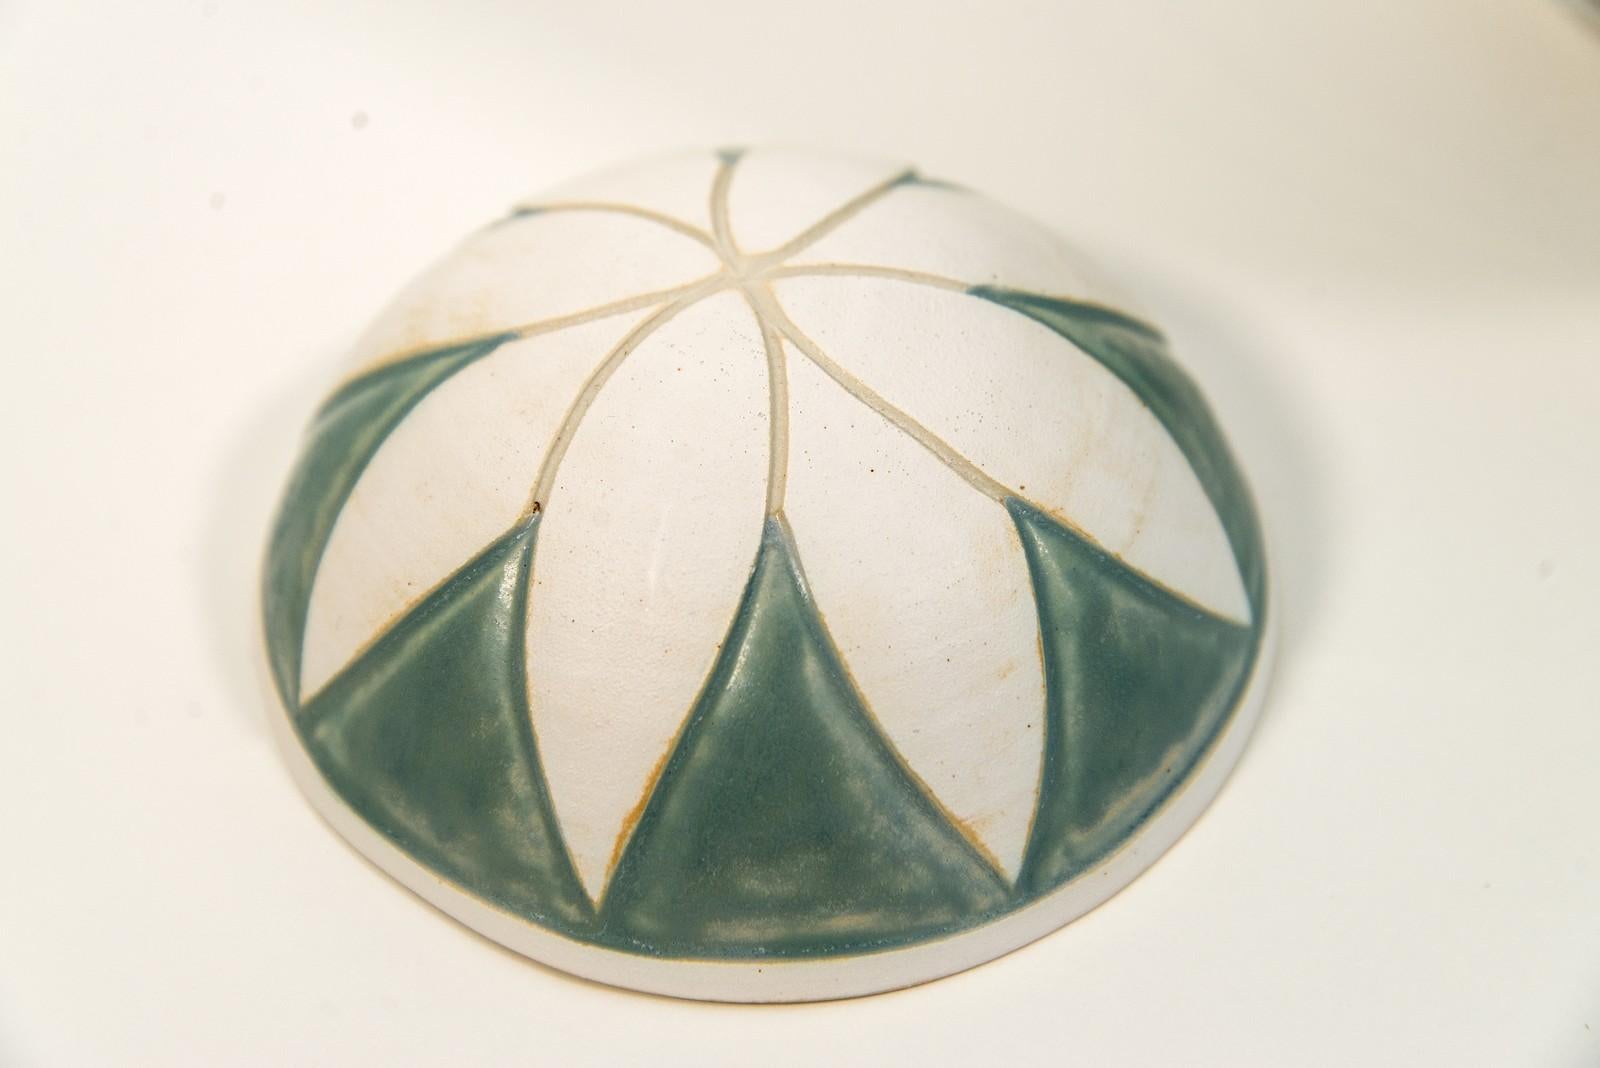 Aqua Jar with Engraved Detail - decorative, handcrafted, porcelain vessel - Contemporary Sculpture by Loren Kaplan